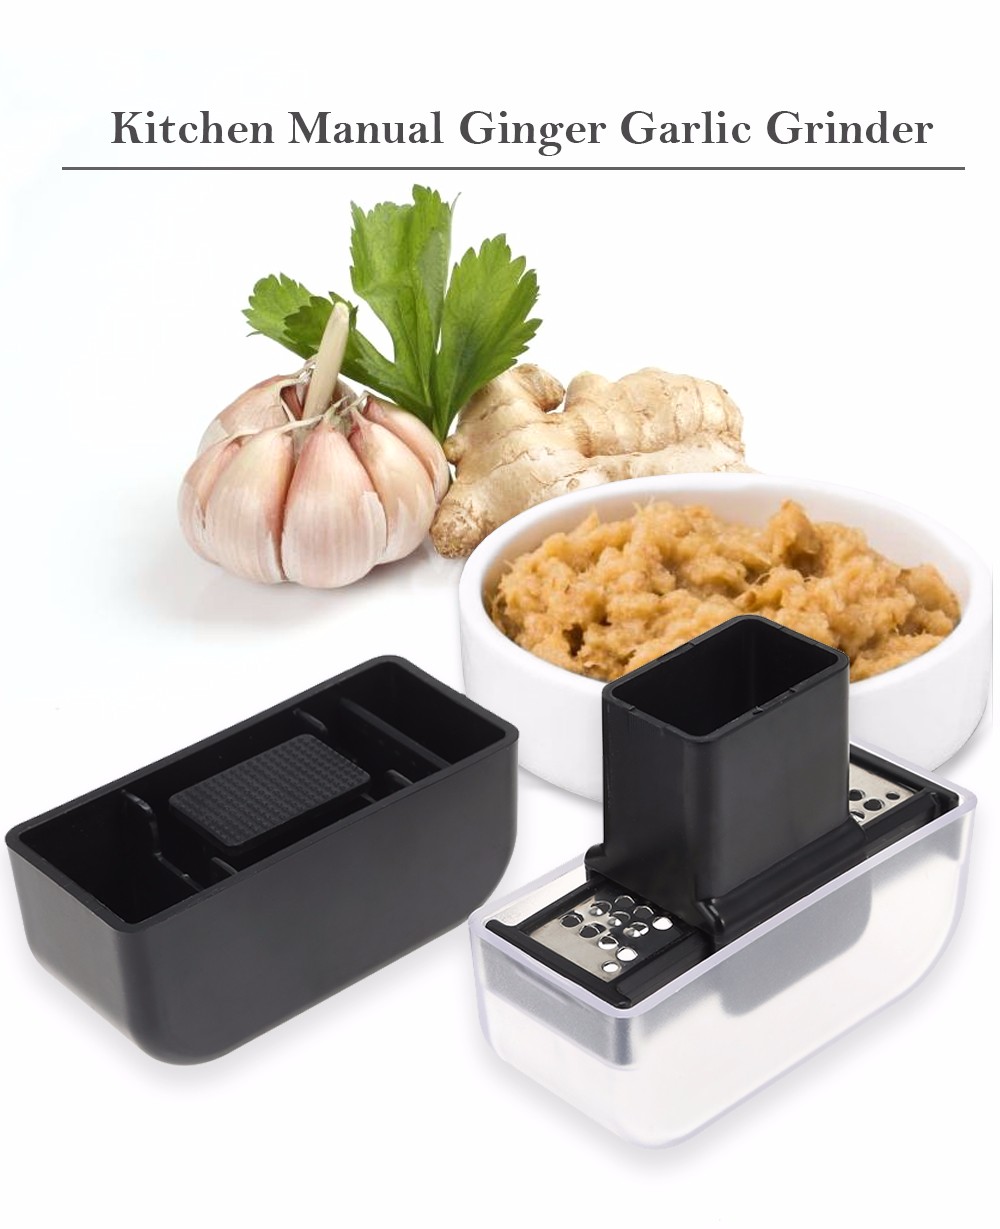 Kitchen Manual Ginger Garlic Cutter